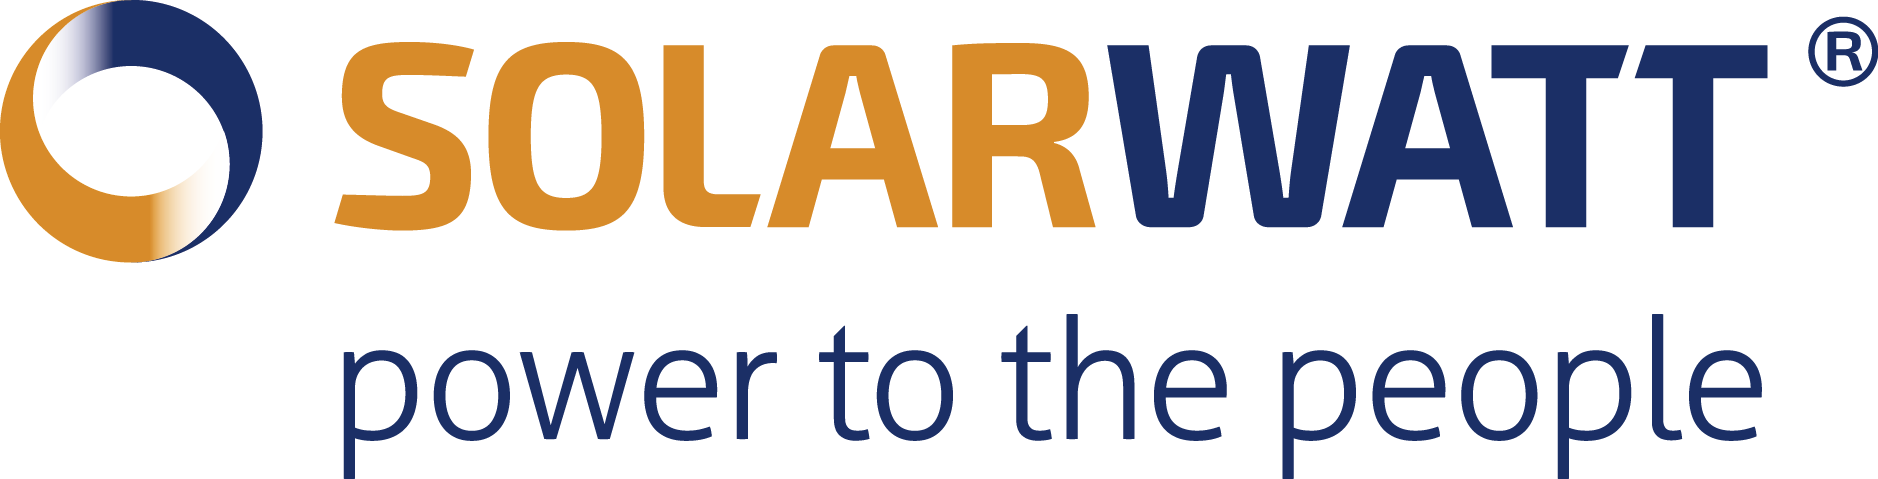 logo-solarwatt-claim-4c-white